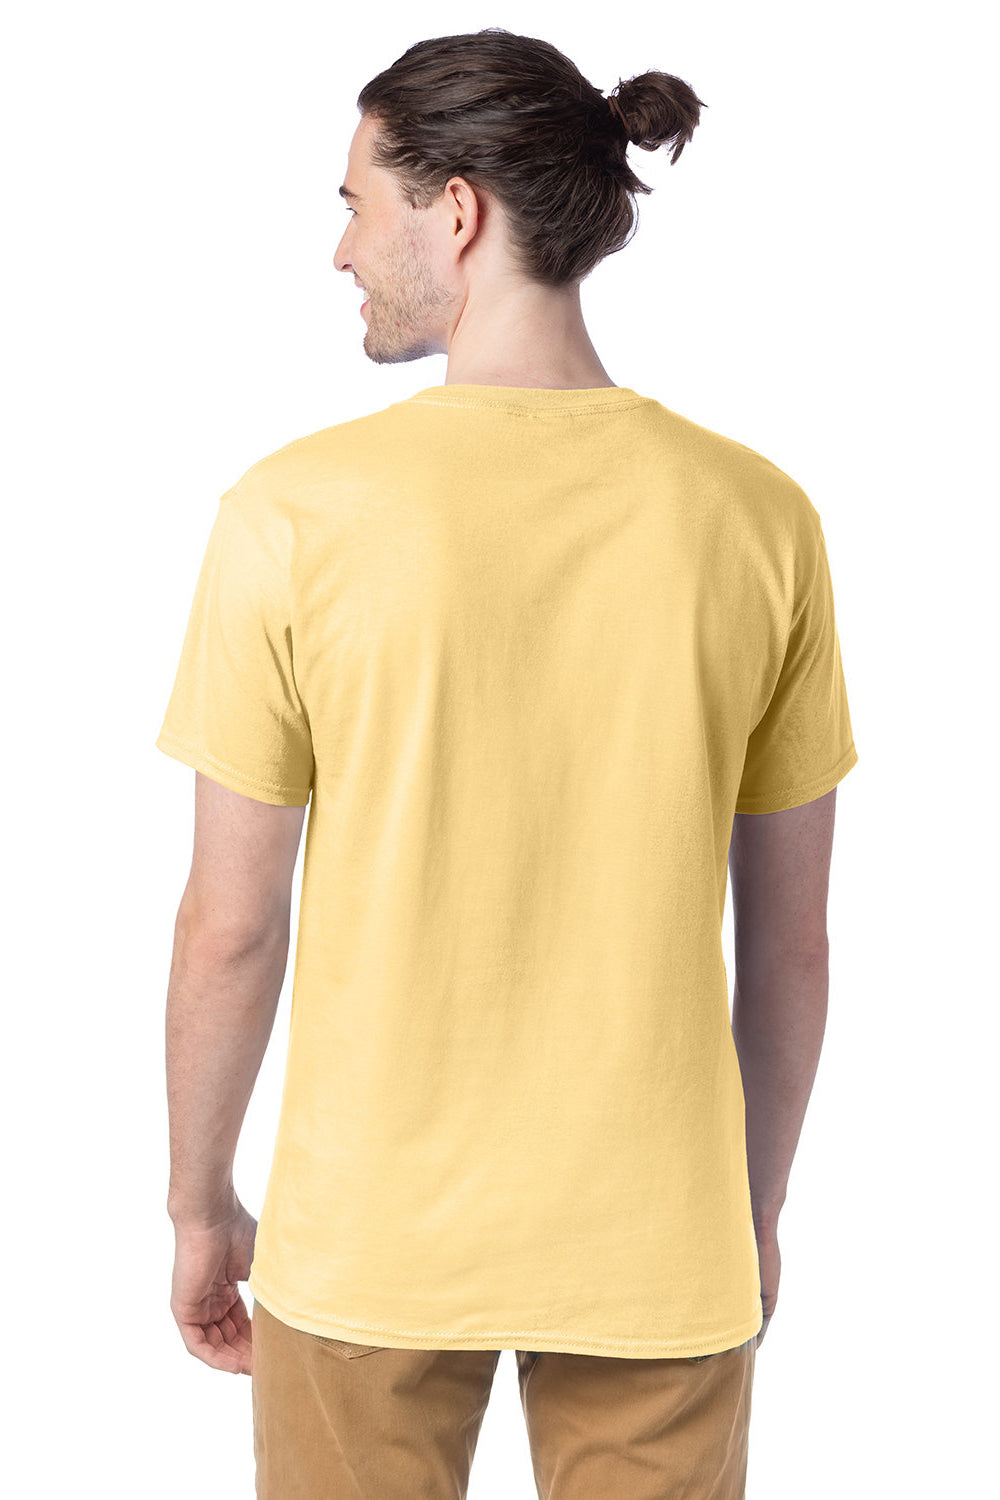 Hanes 5280 Mens ComfortSoft Short Sleeve Crewneck T-Shirt Athletic Gold Back